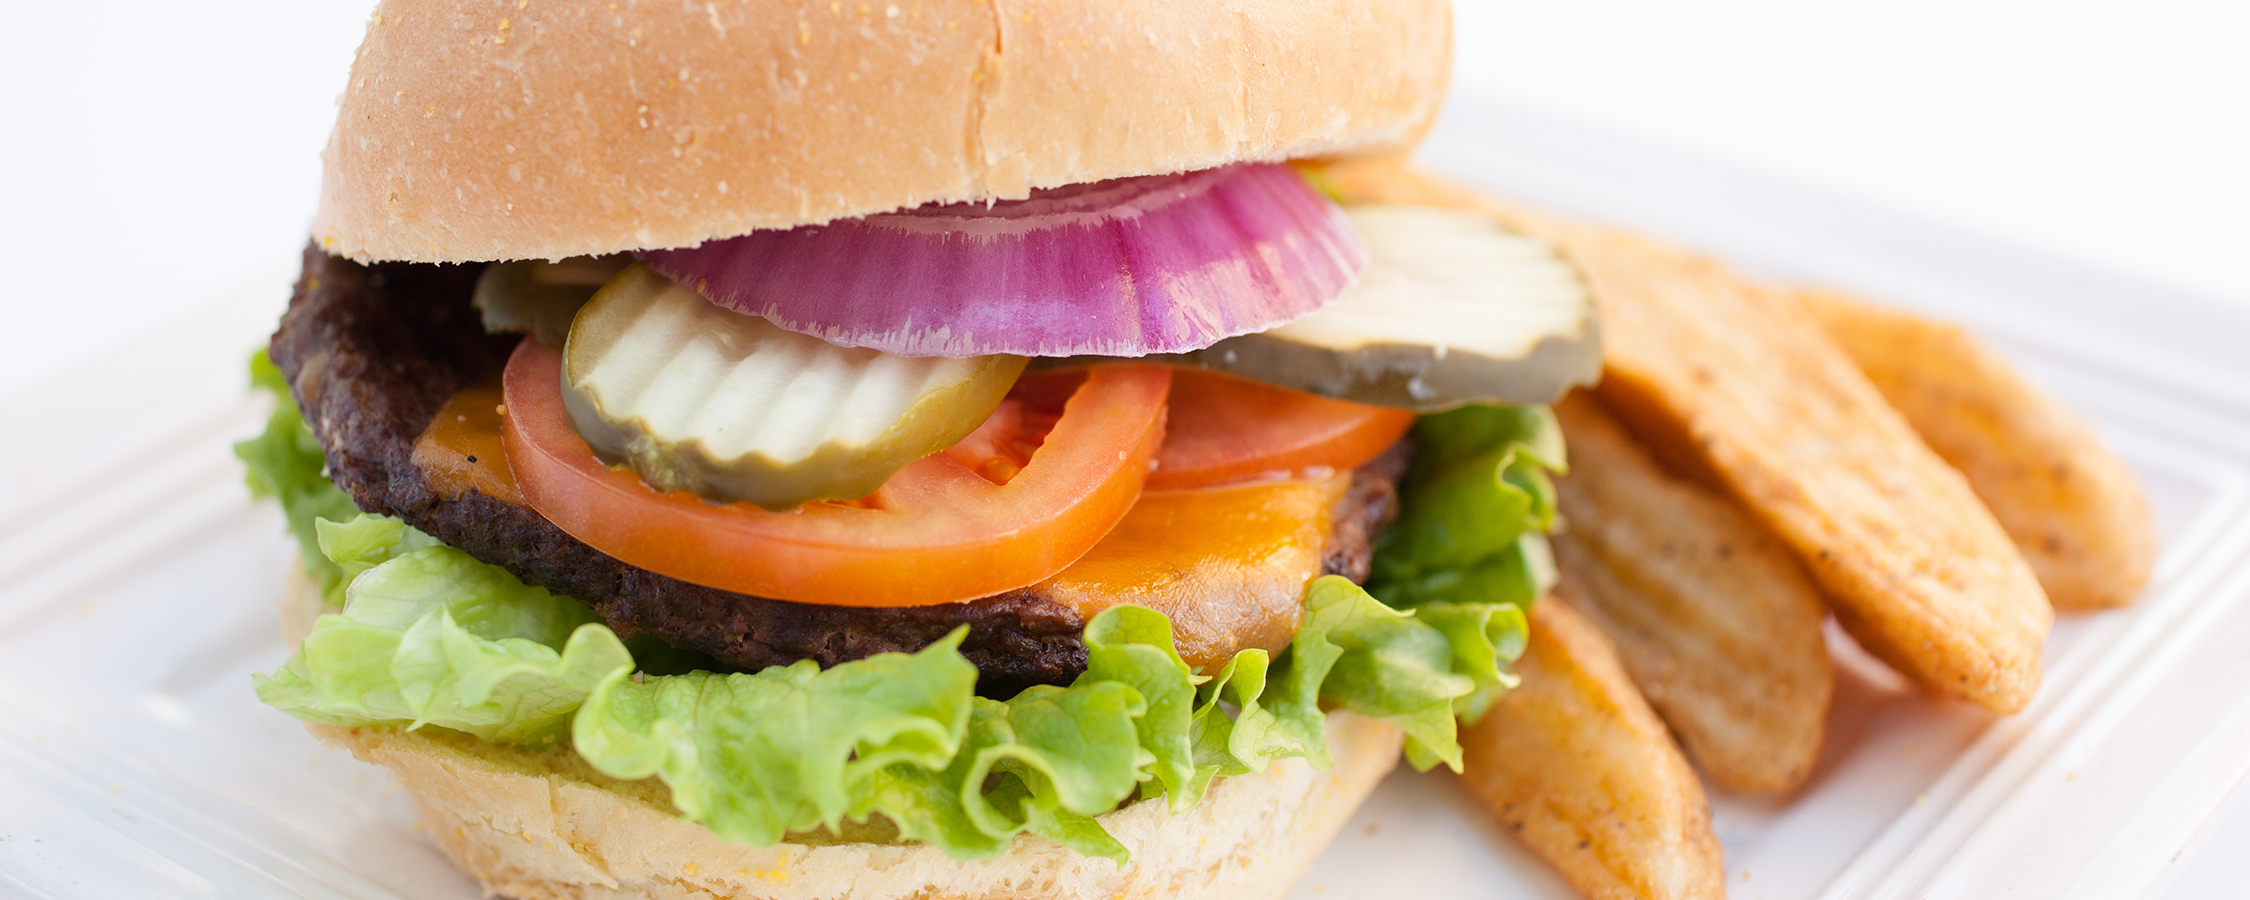 Dietary Concerns - healthy sandwich